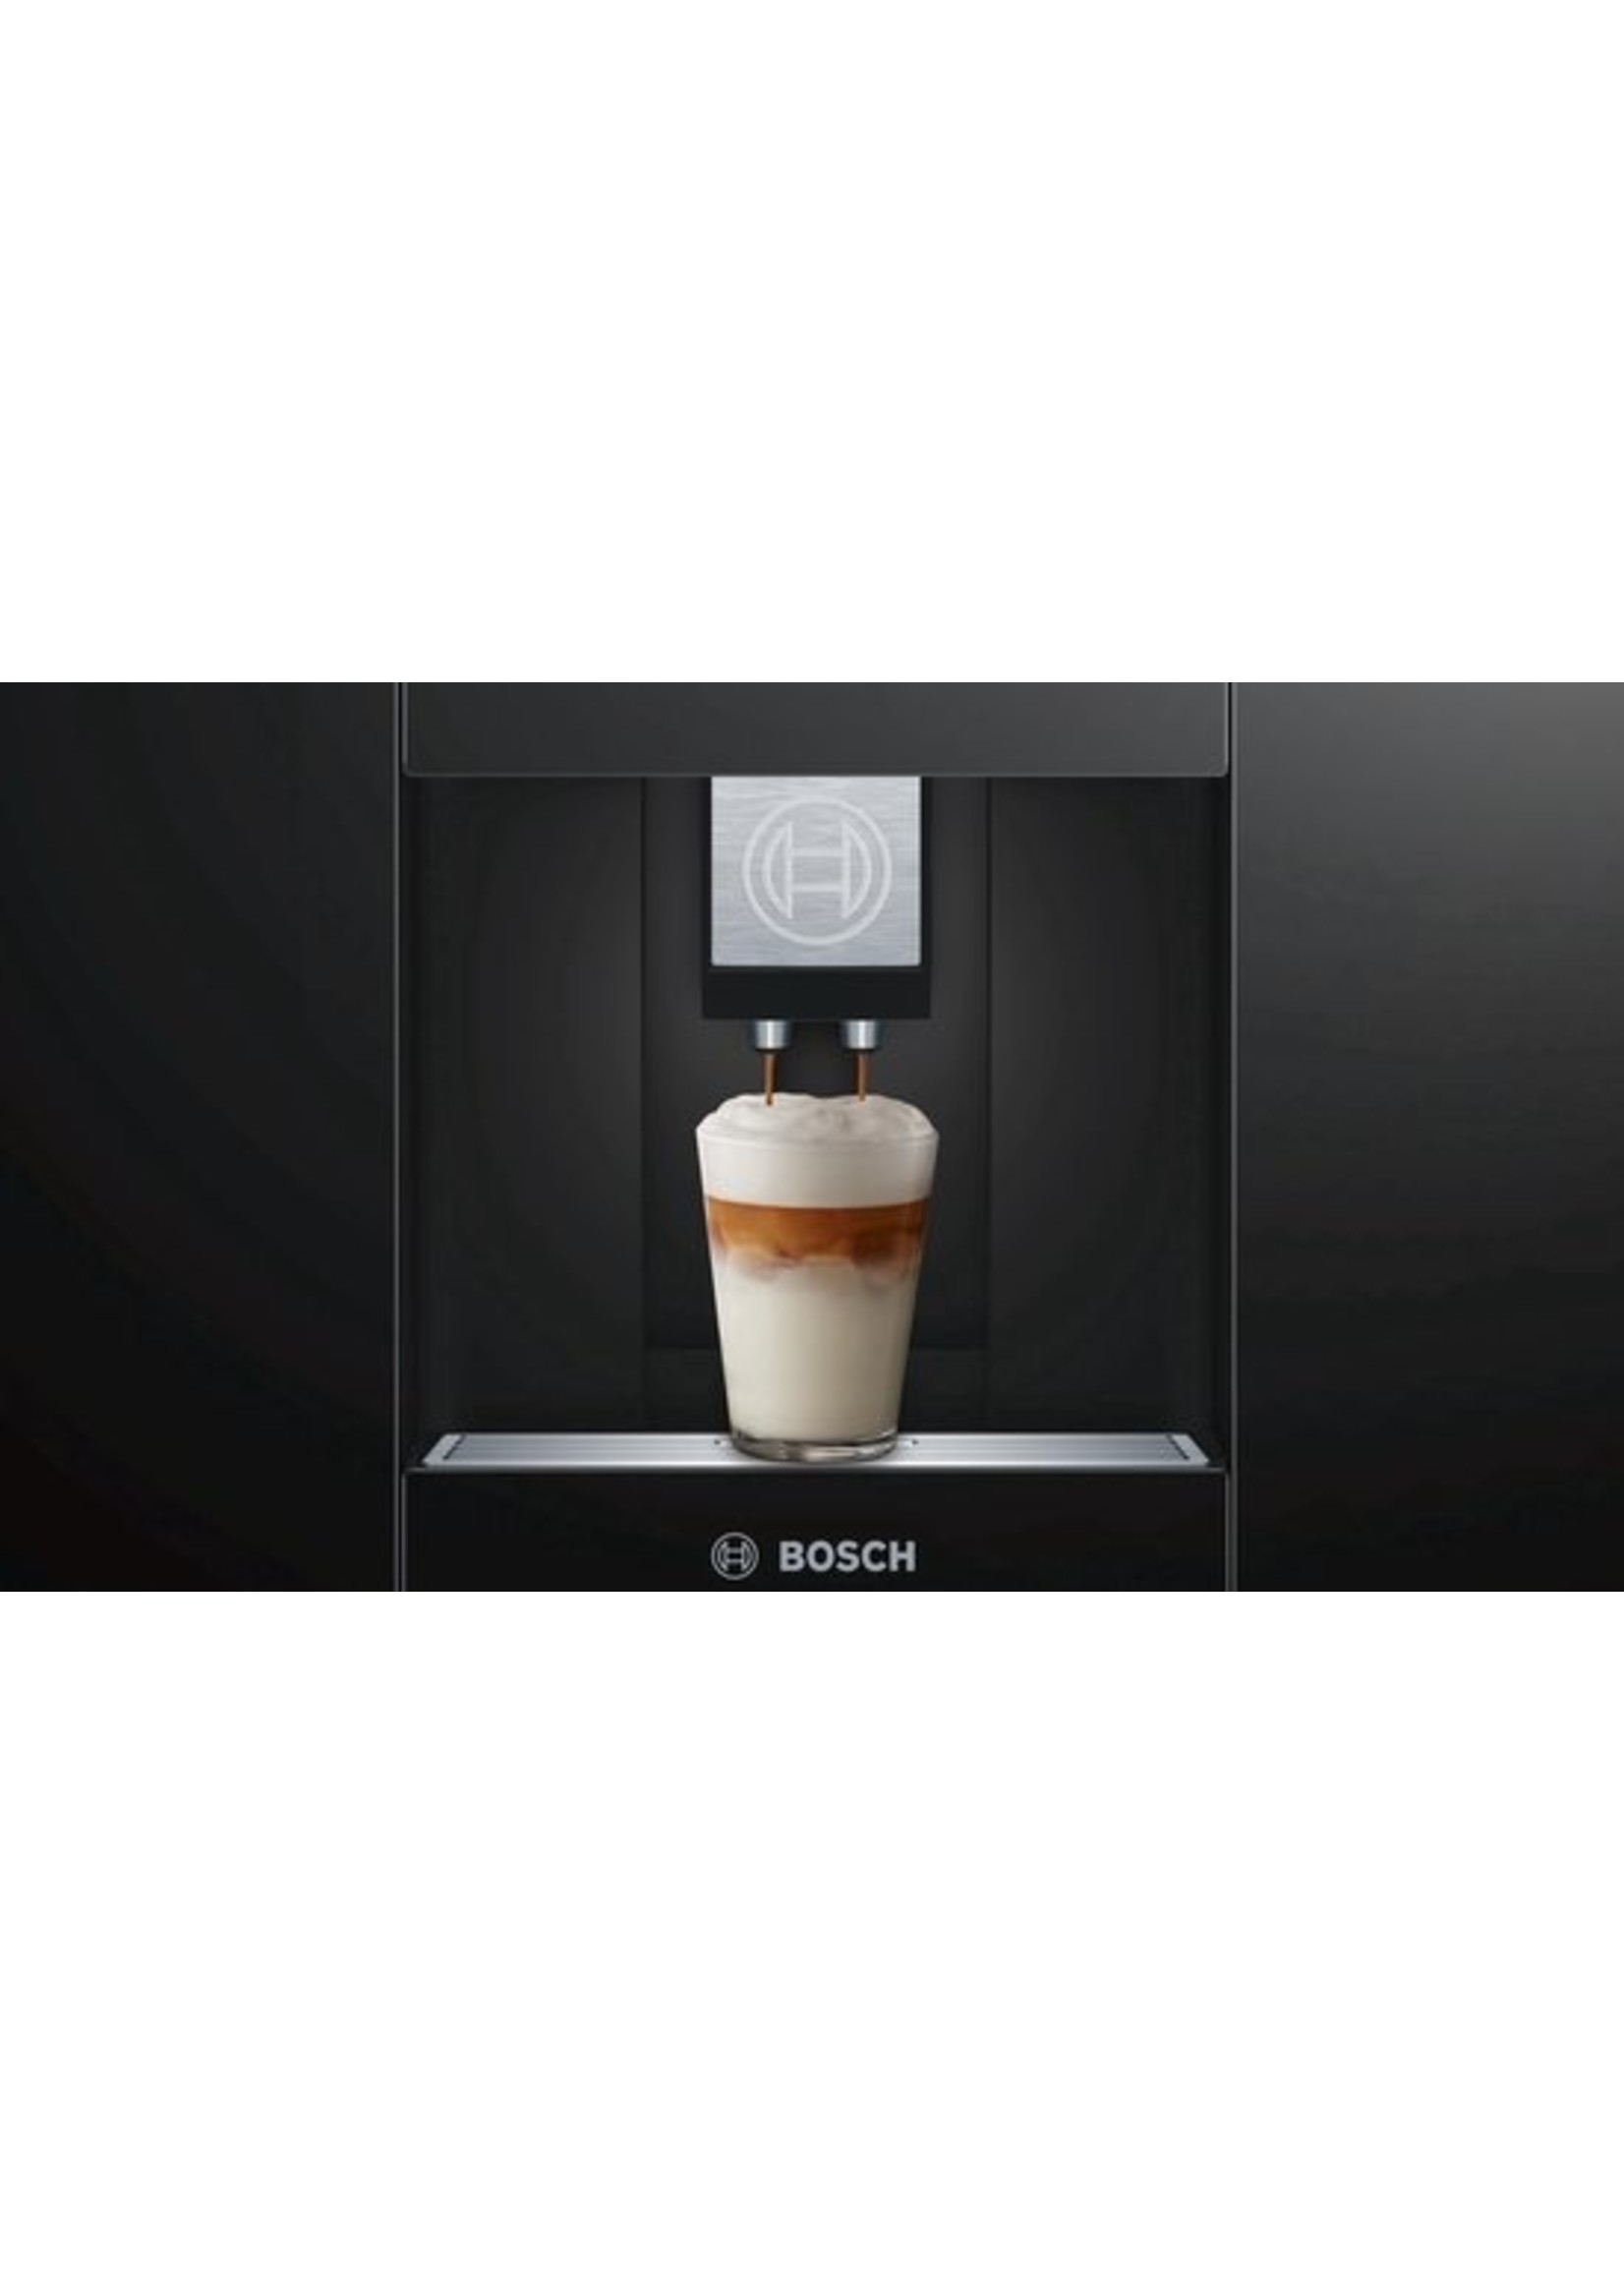 Bosch Bosch CTL636ES6 Serie 8 - Inbouw espresso volautomaat - WiFi